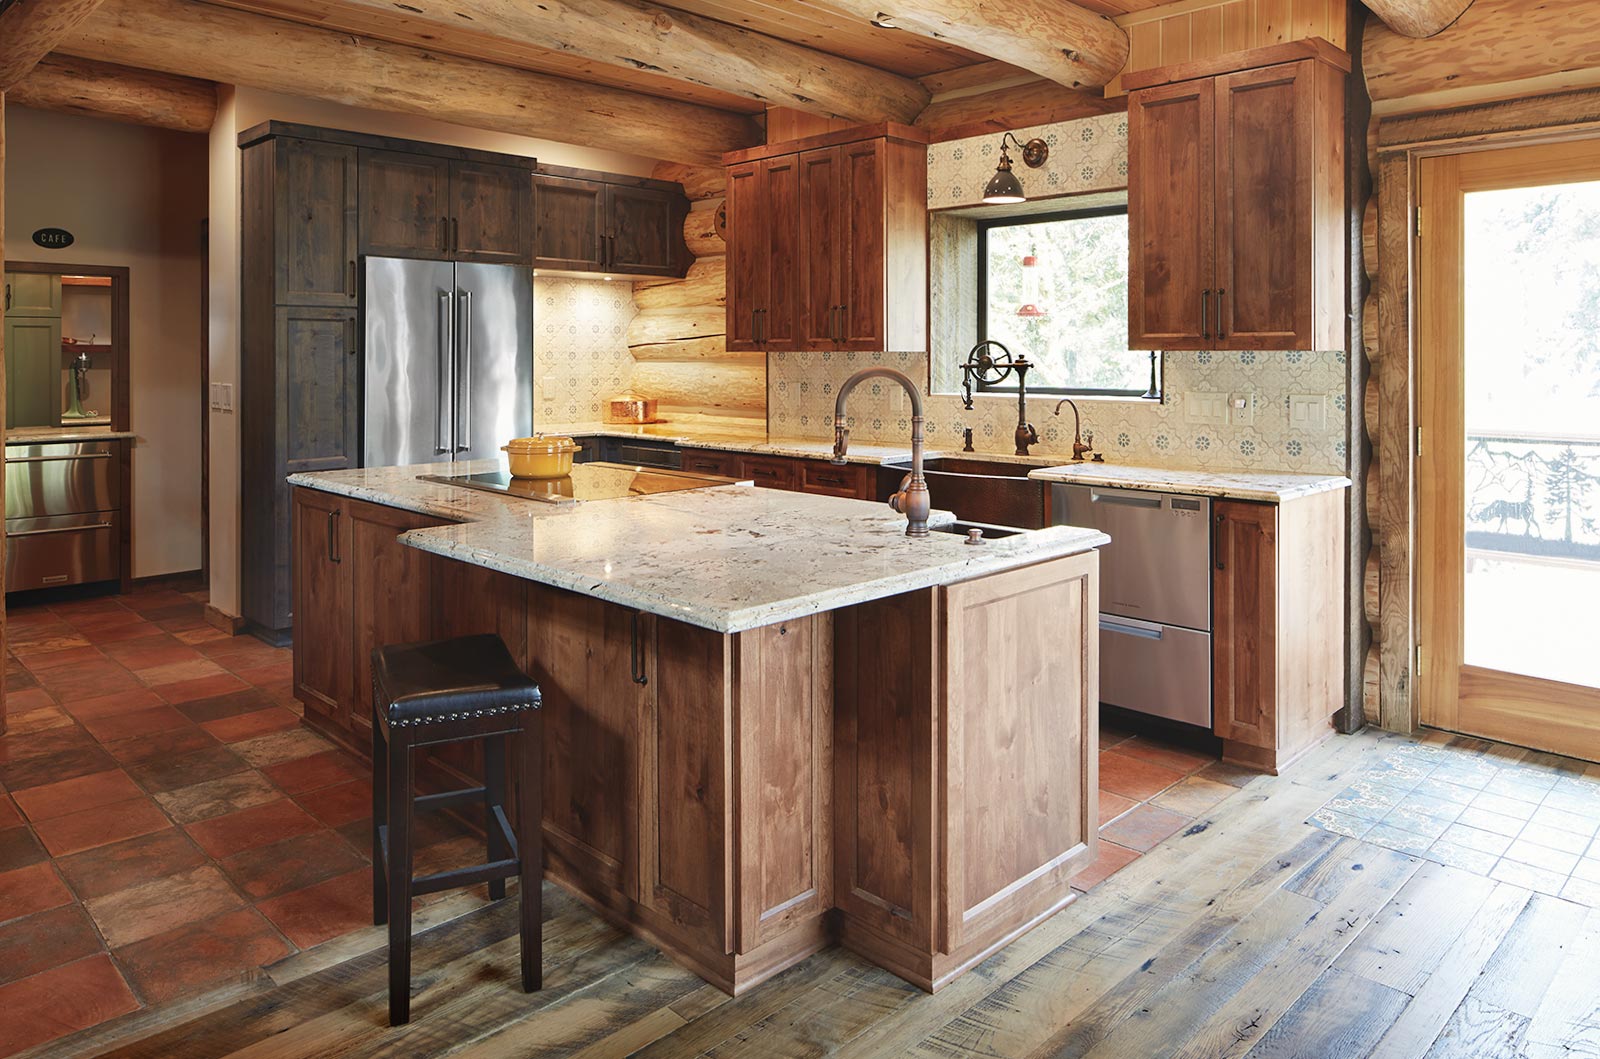 Modern farmhouse kitchen interior design, space planning, and remodel by interior designer Becky Olsen, Rebecca Olsen Designs, Oregon